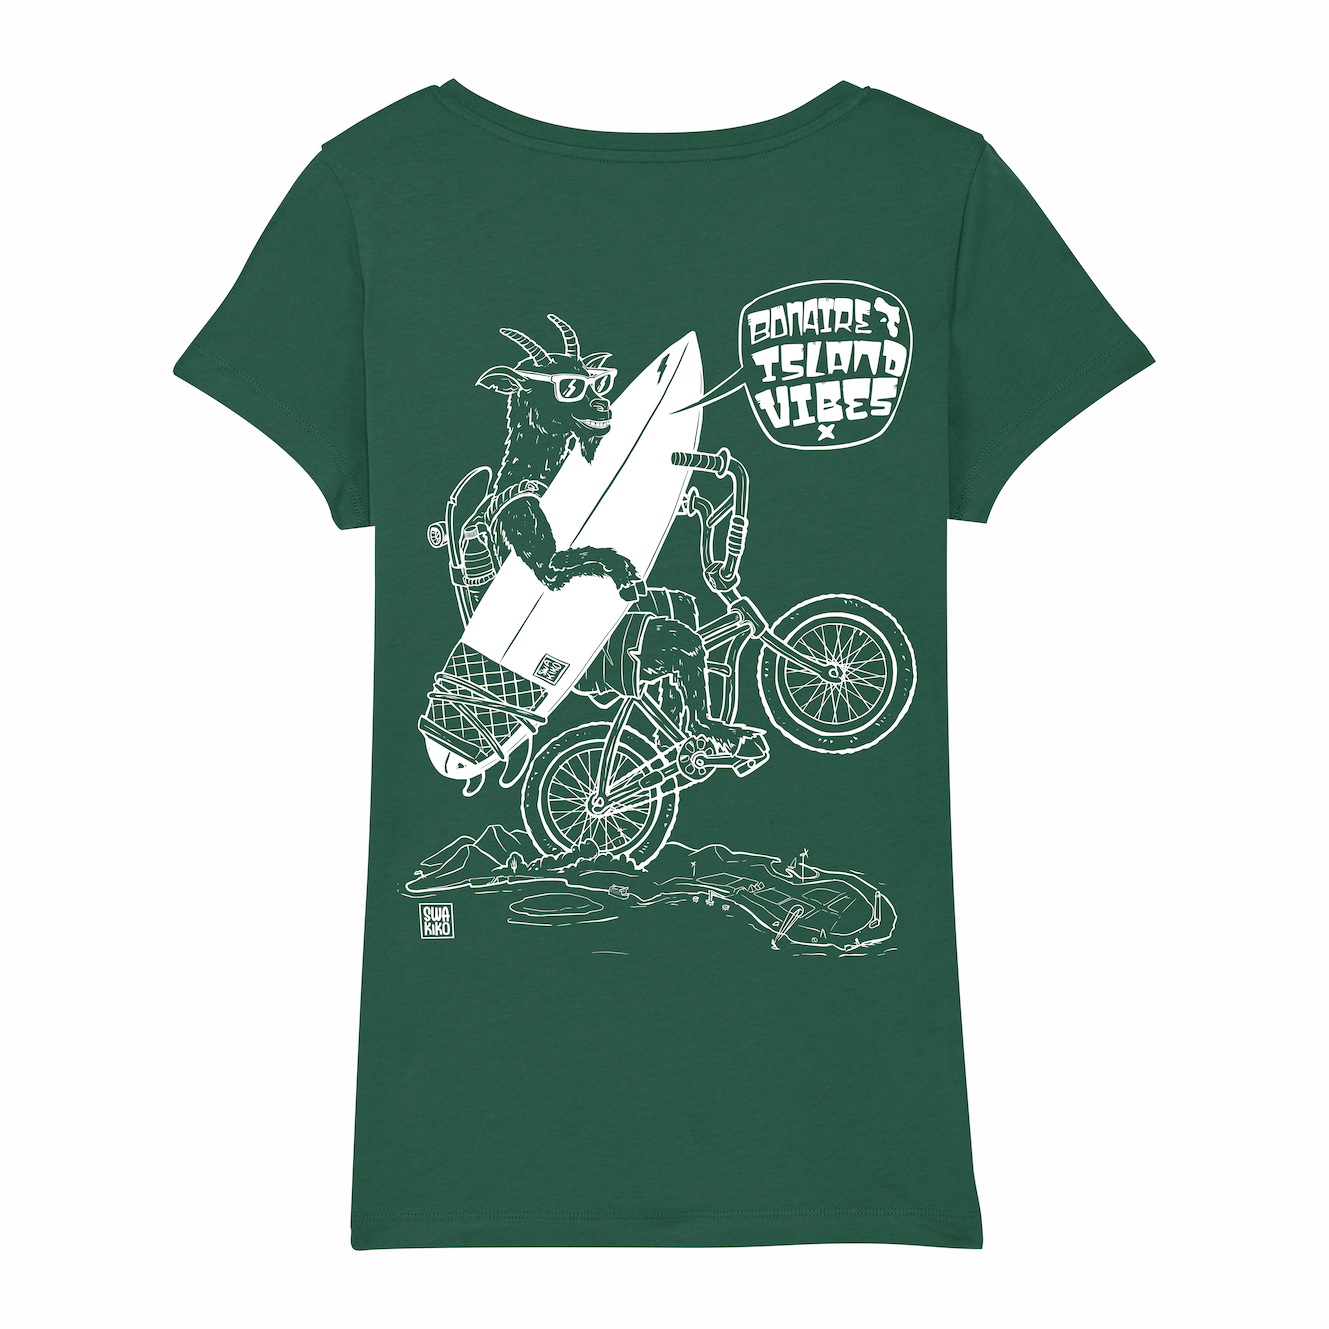 Bonaire Island Vibes T-shirt women, green